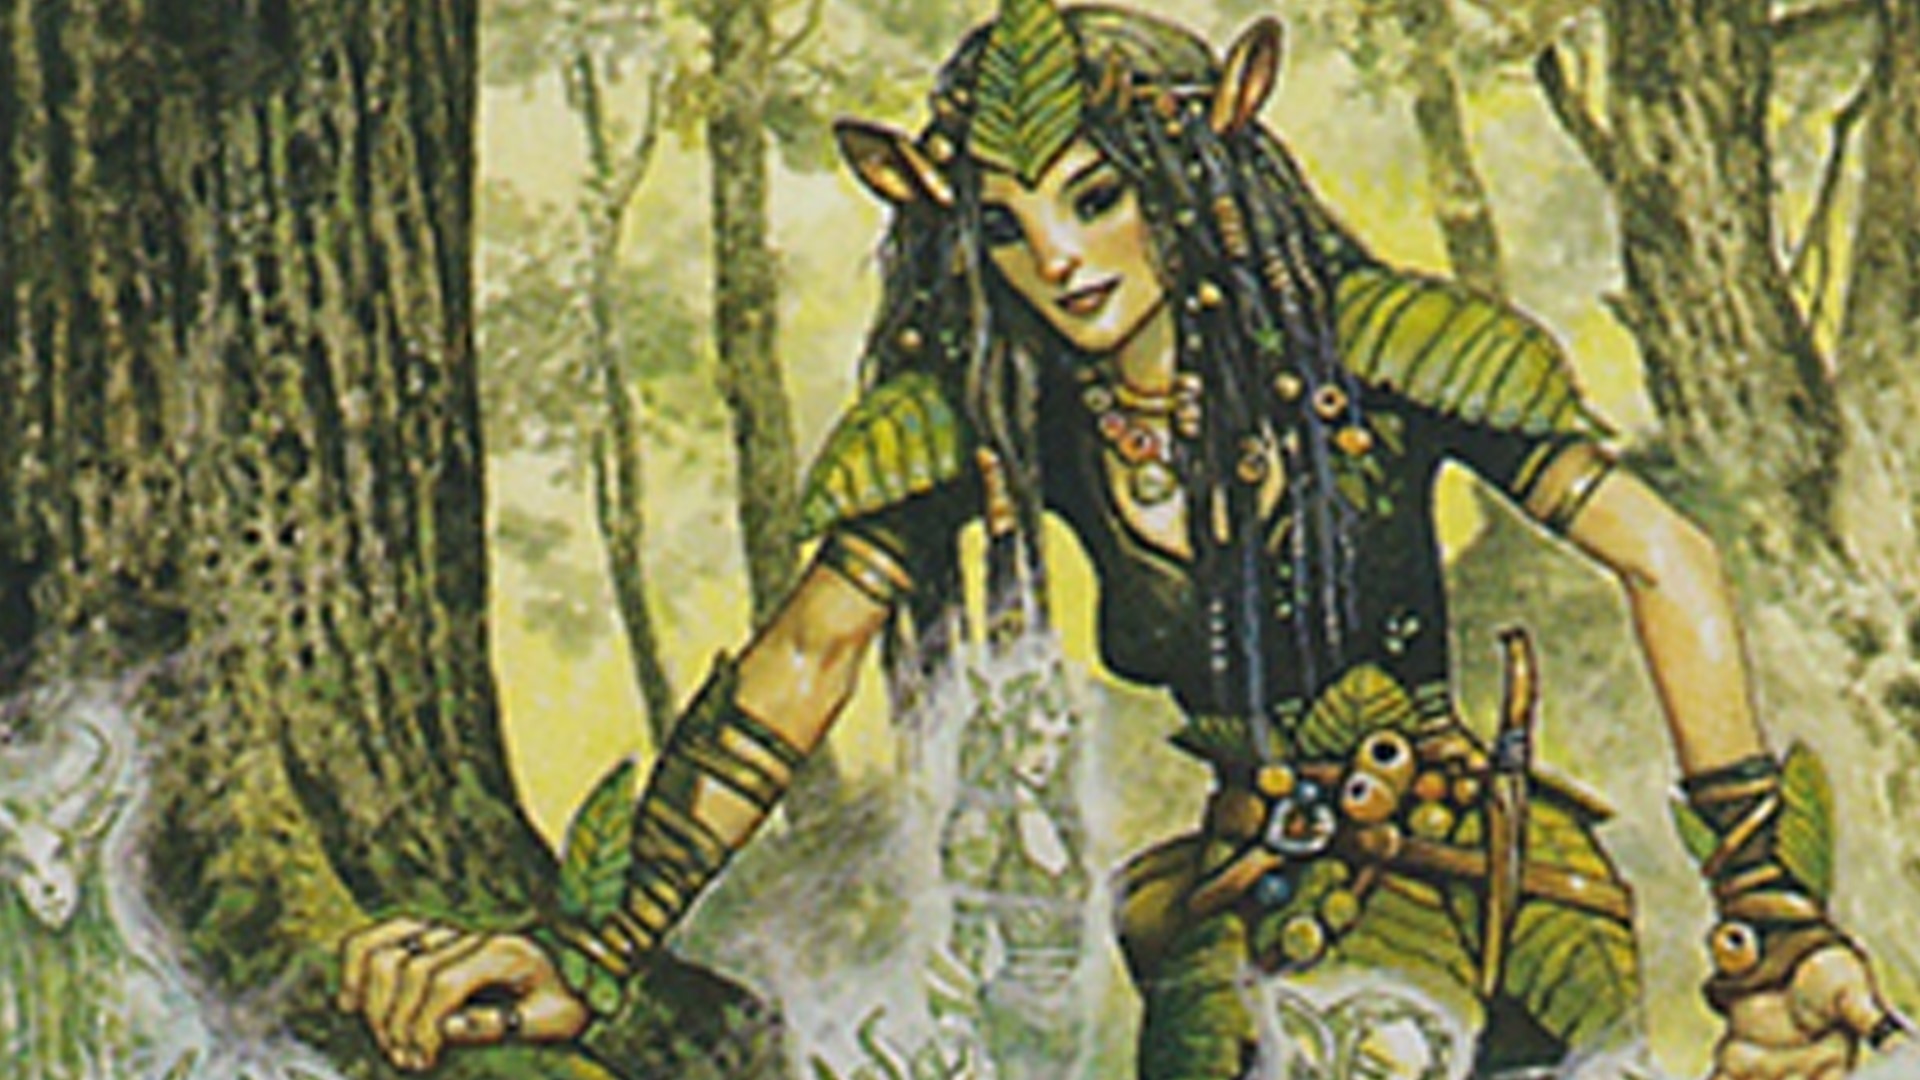 DnD Druid 5E - Wizards of the Coast artwork showing an elf druid running through a forest